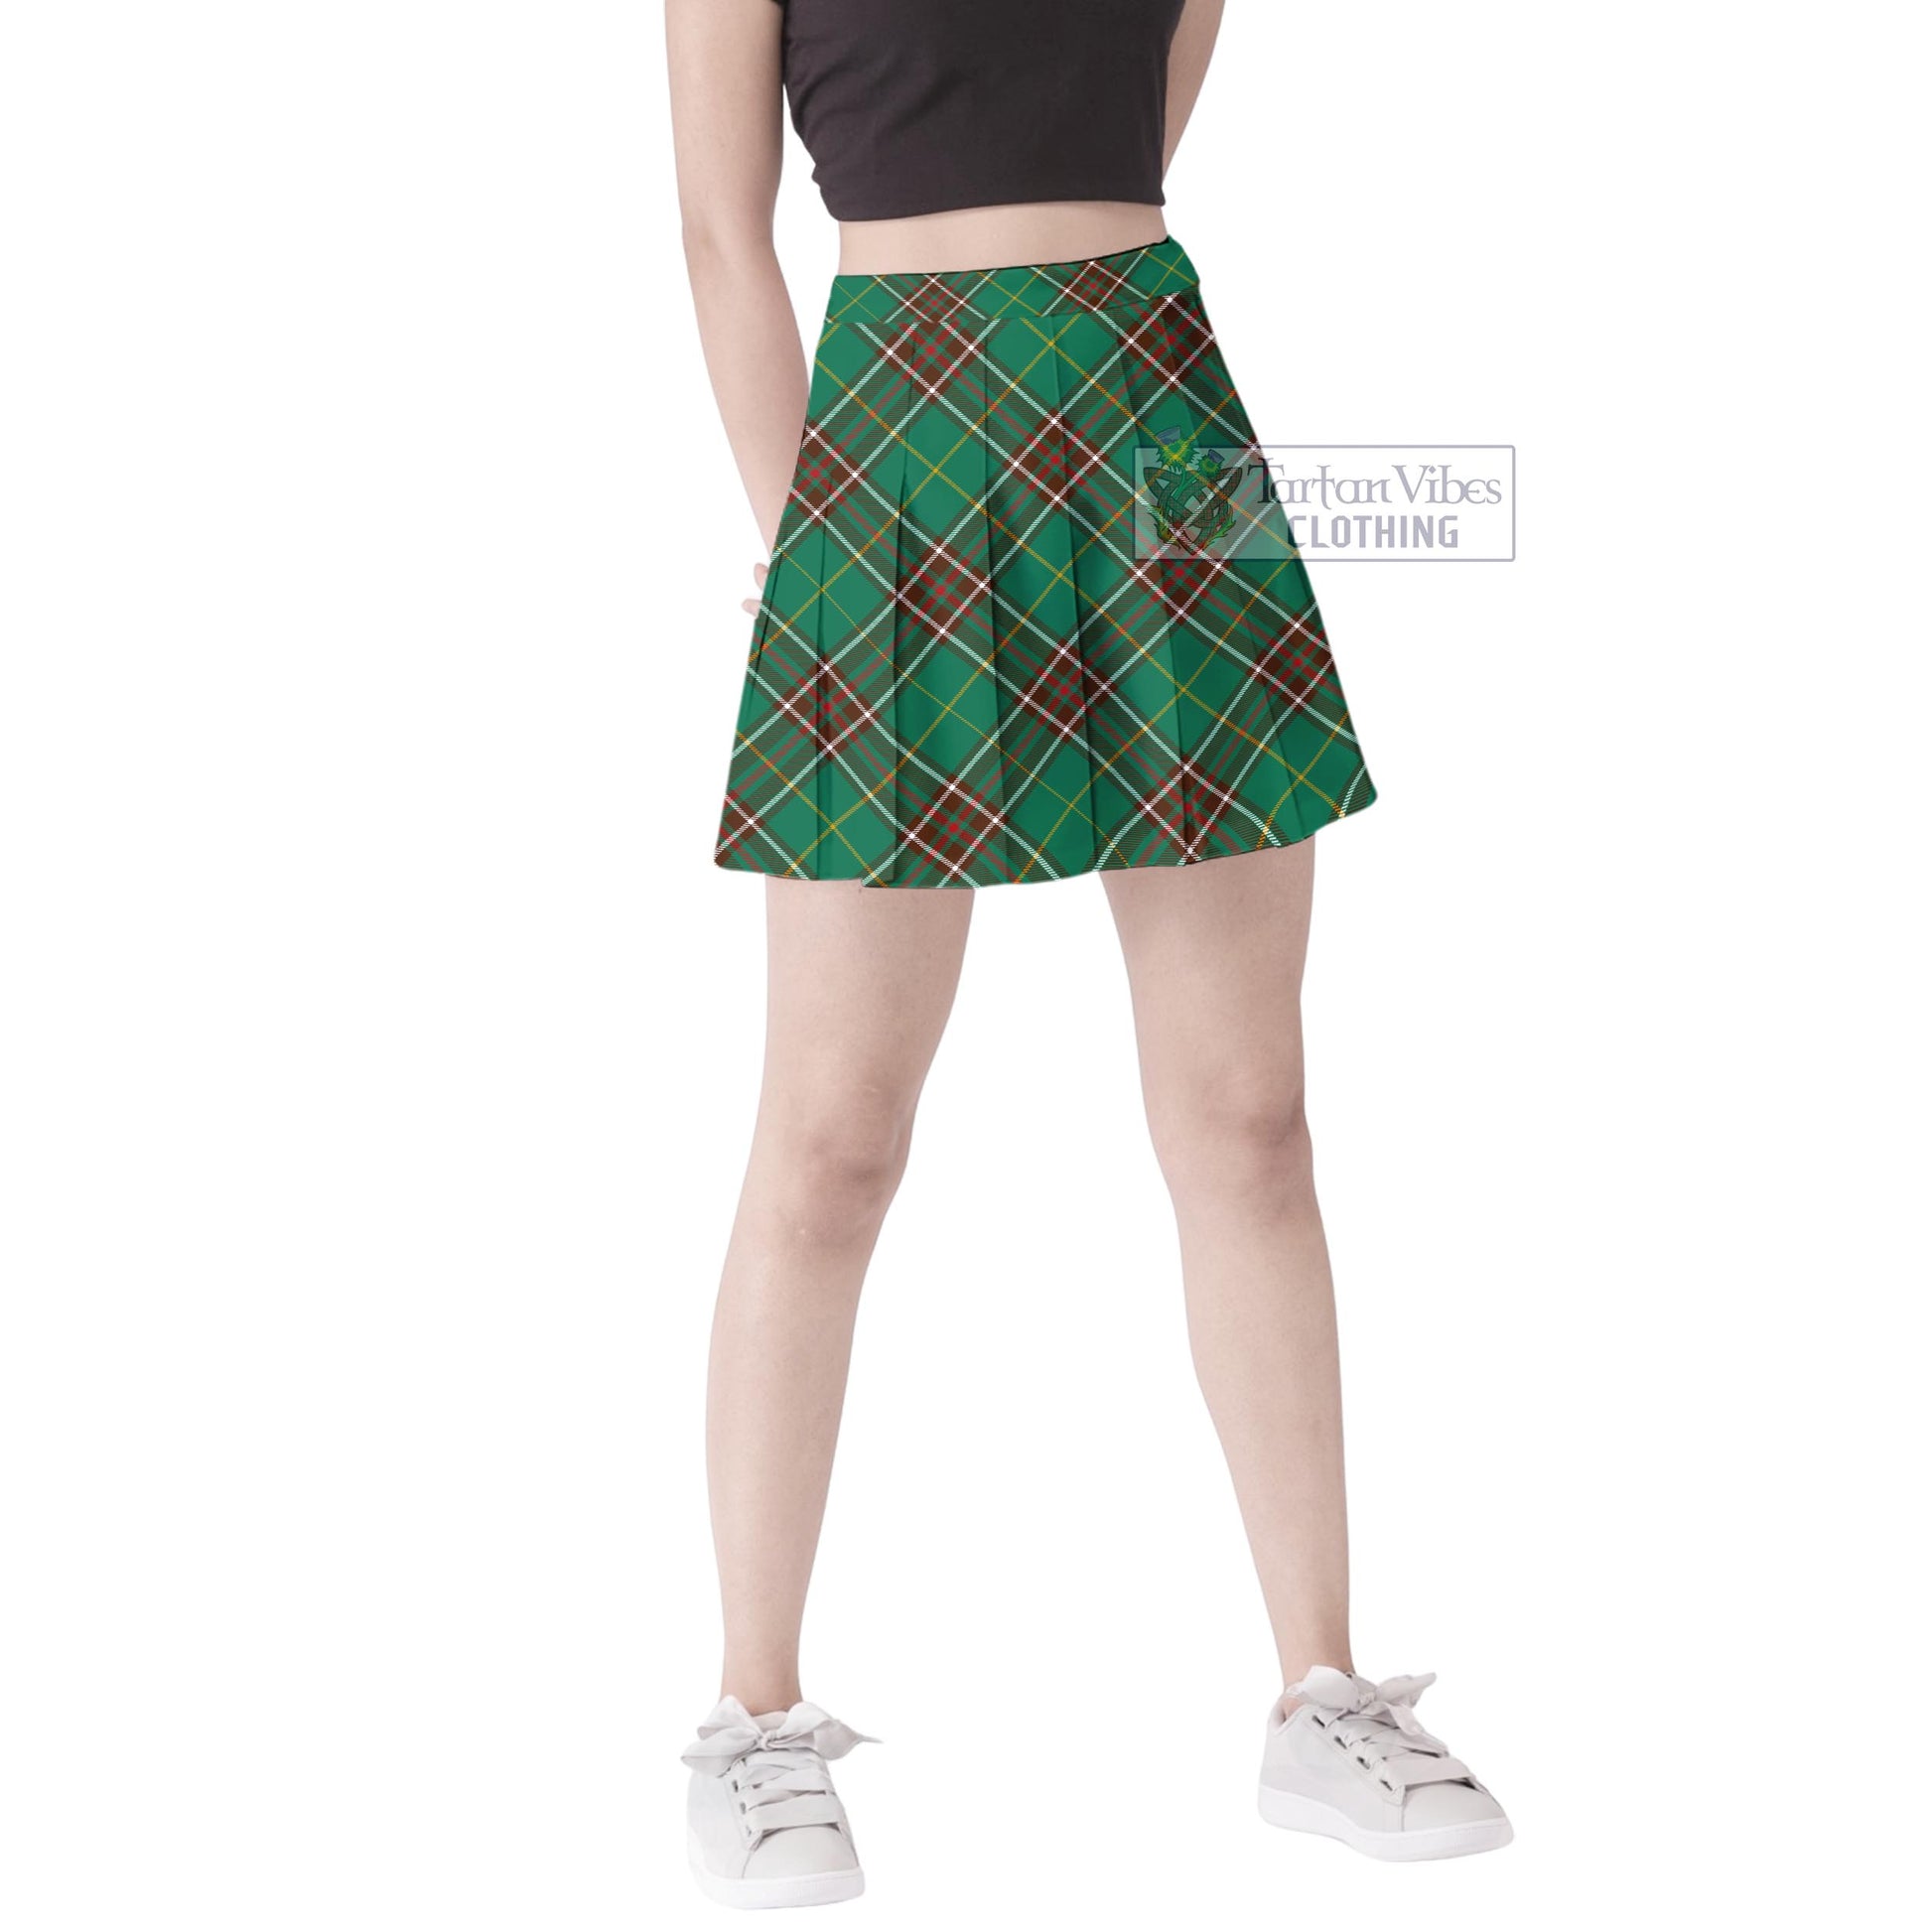 Tartan Vibes Clothing Newfoundland And Labrador Province Canada Tartan Women's Plated Mini Skirt